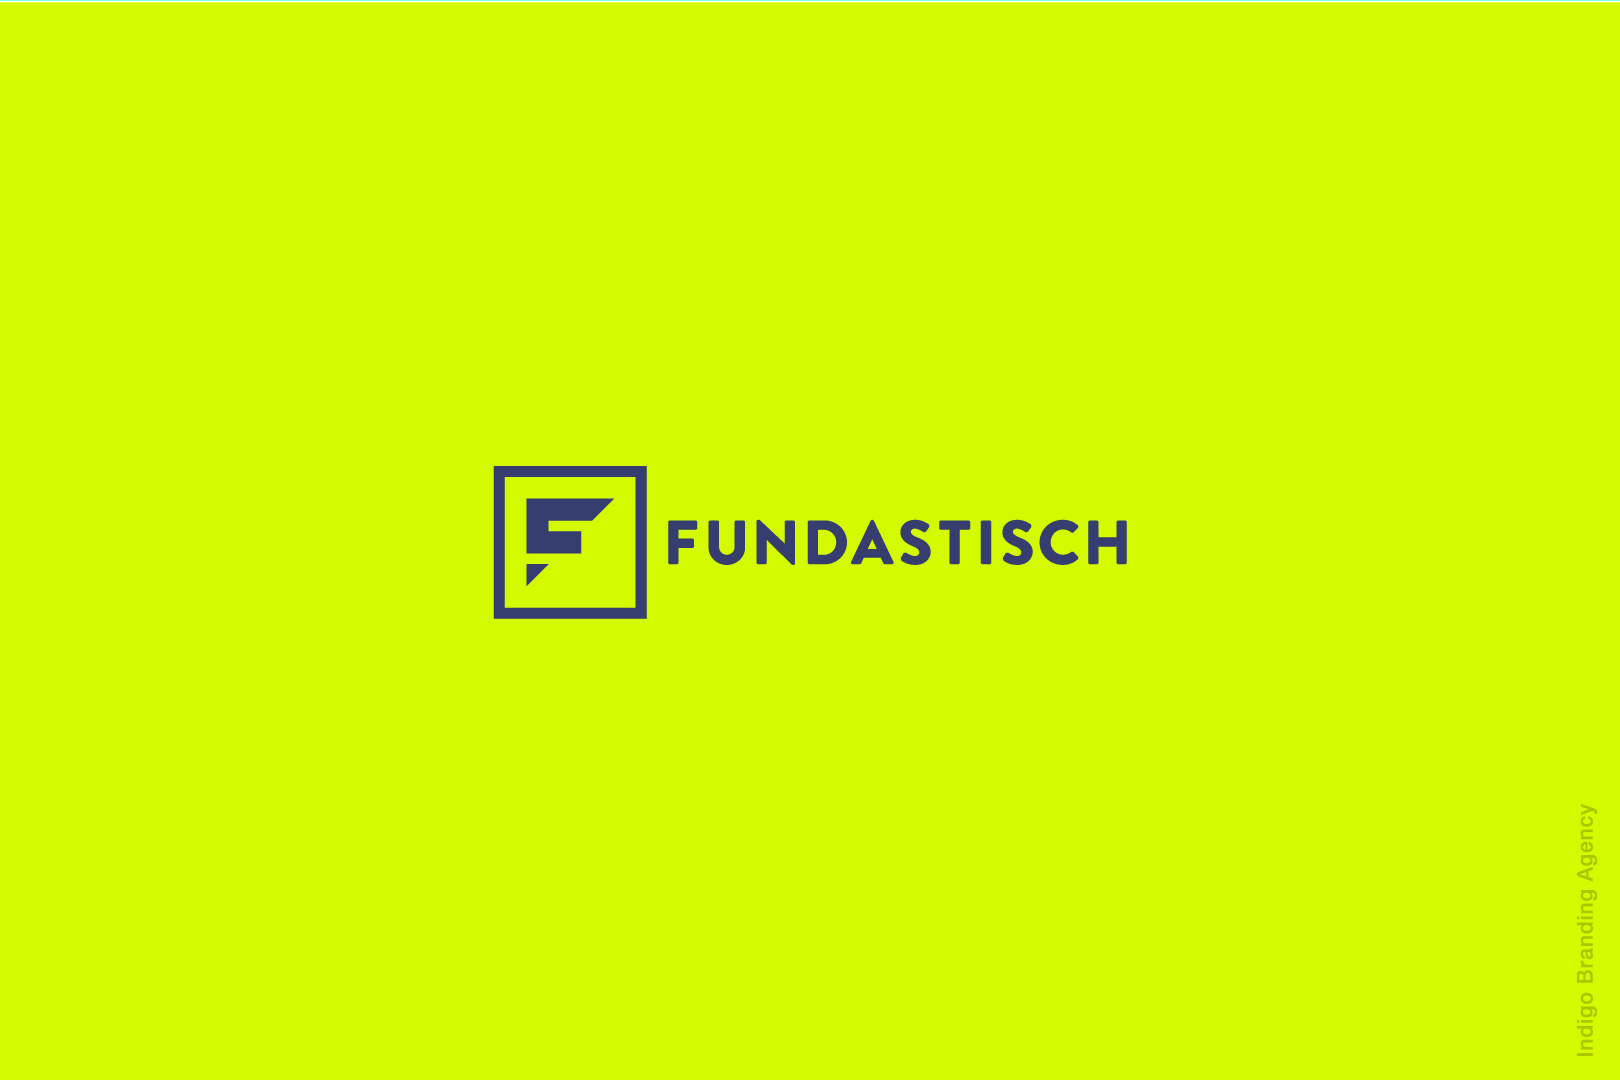 Fundastisch branding and logo design by Indigo branding